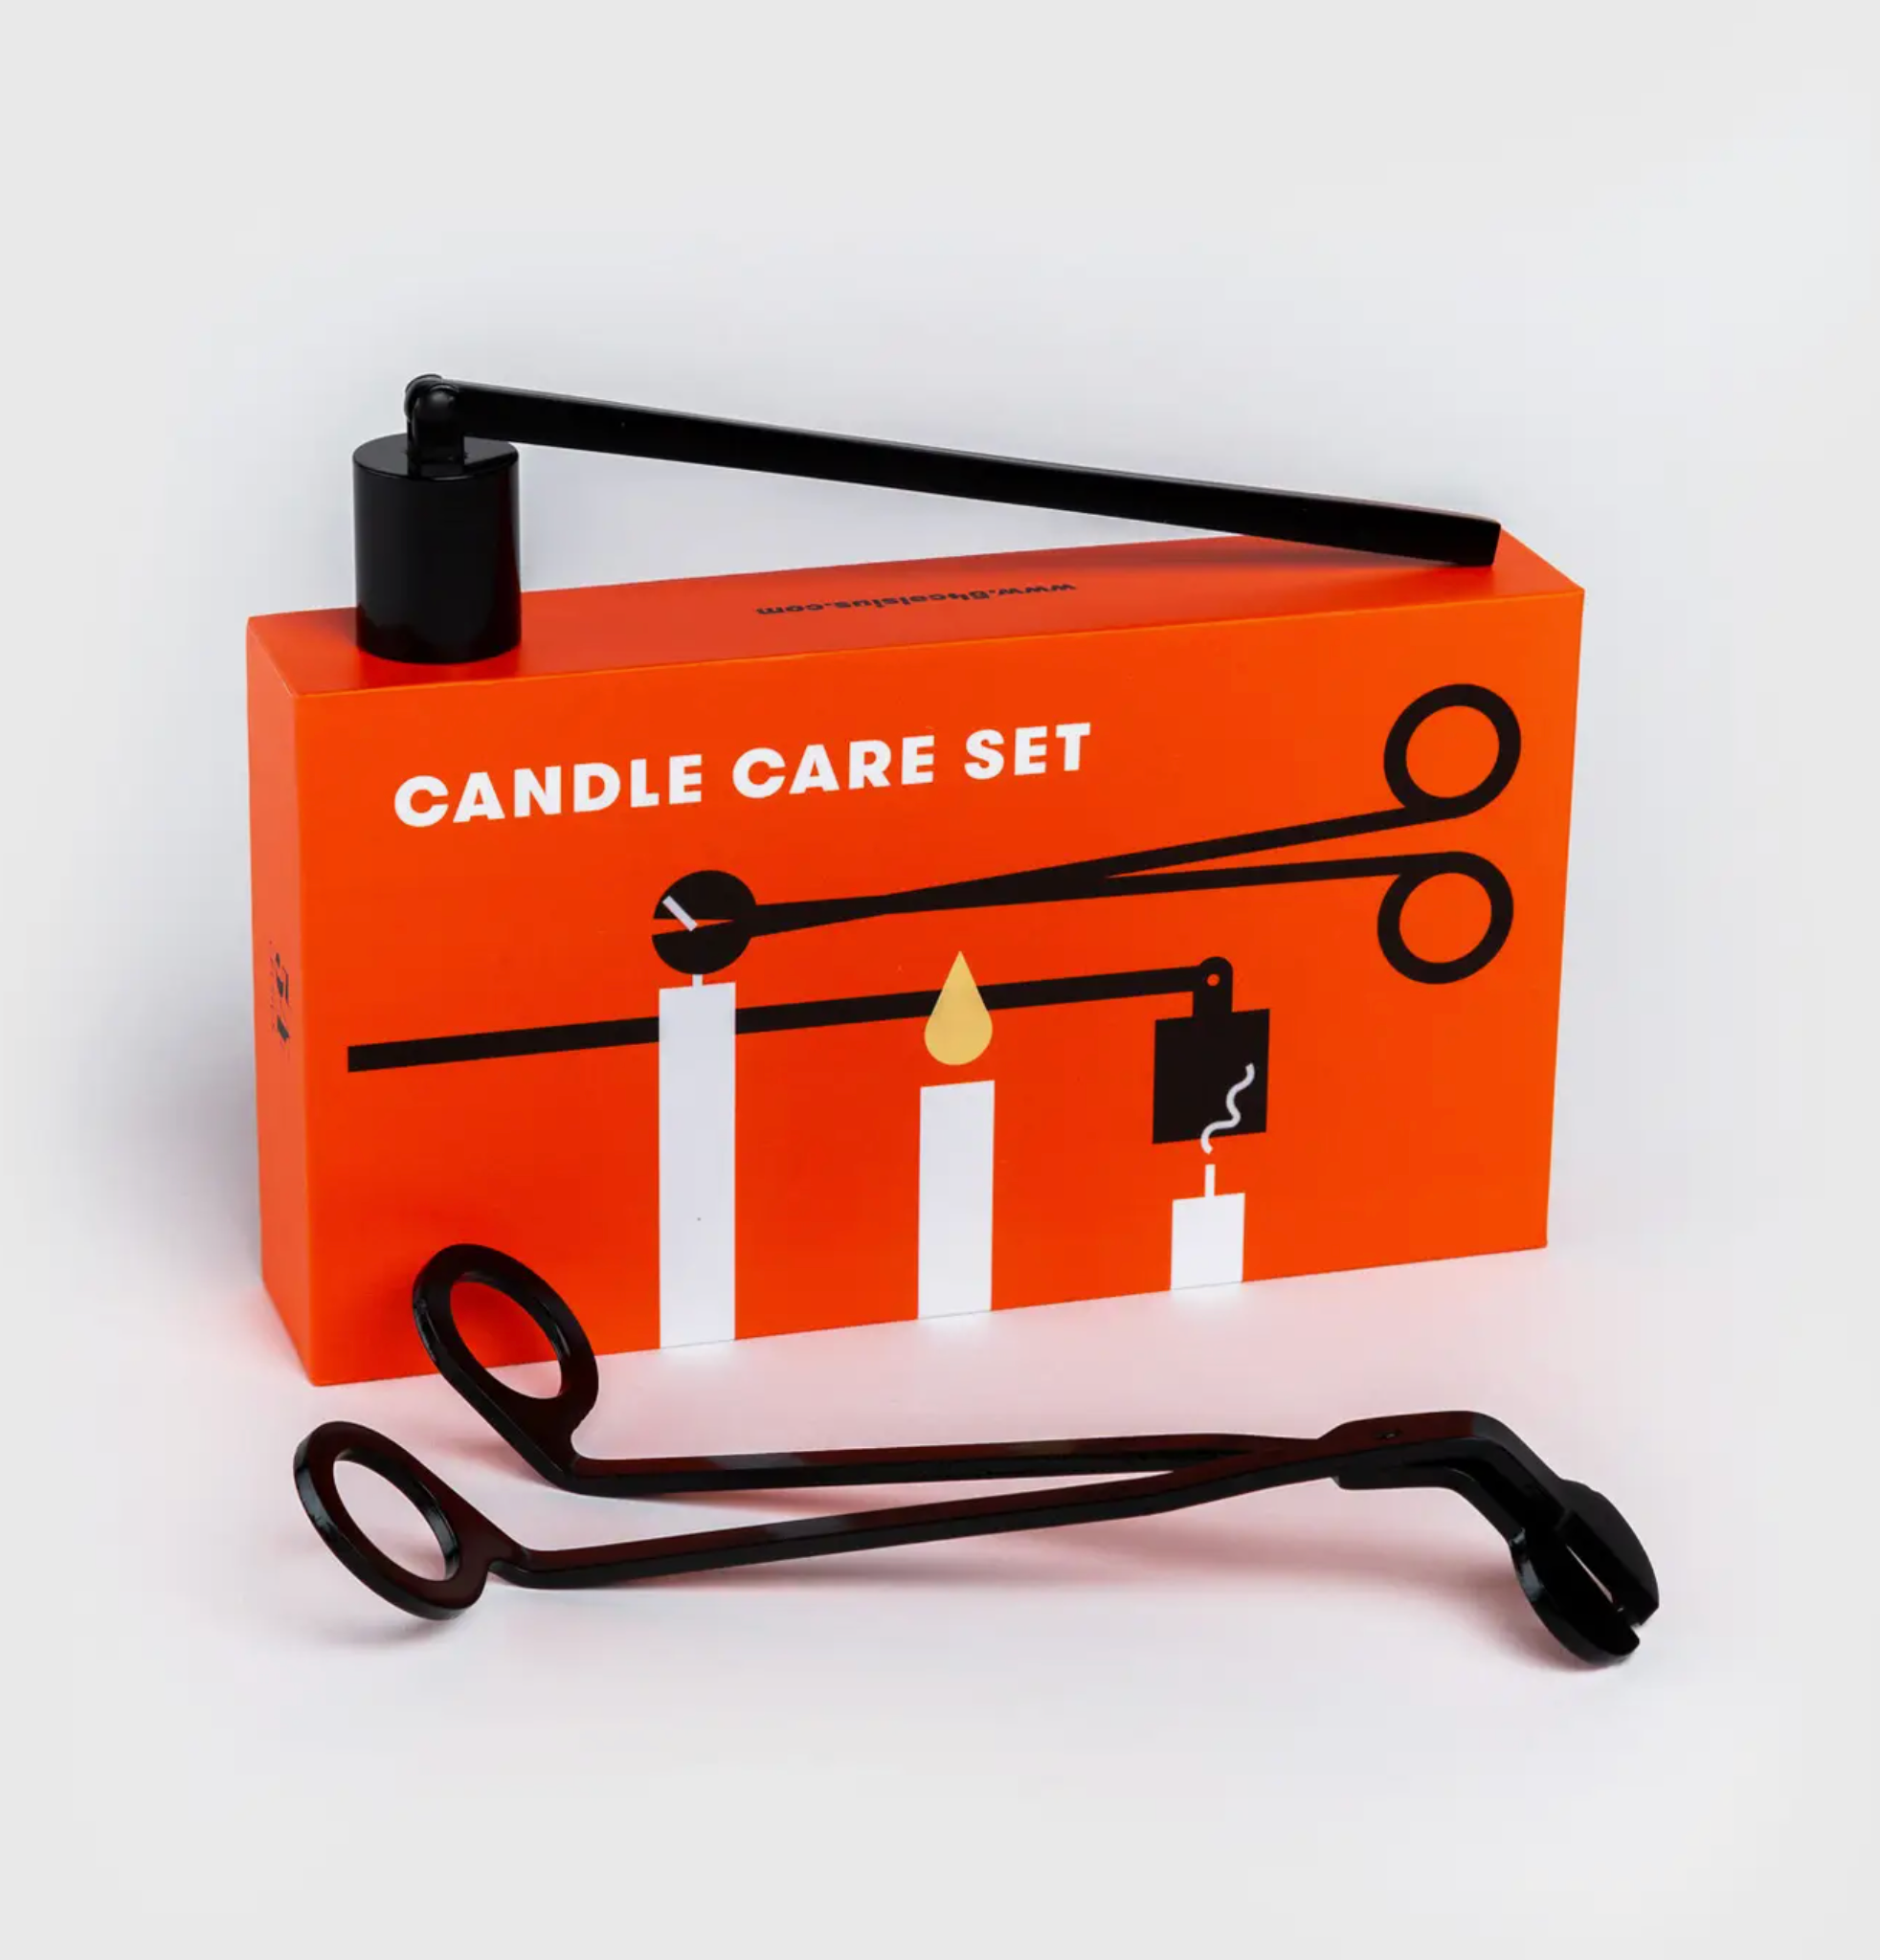 Candle Care Set